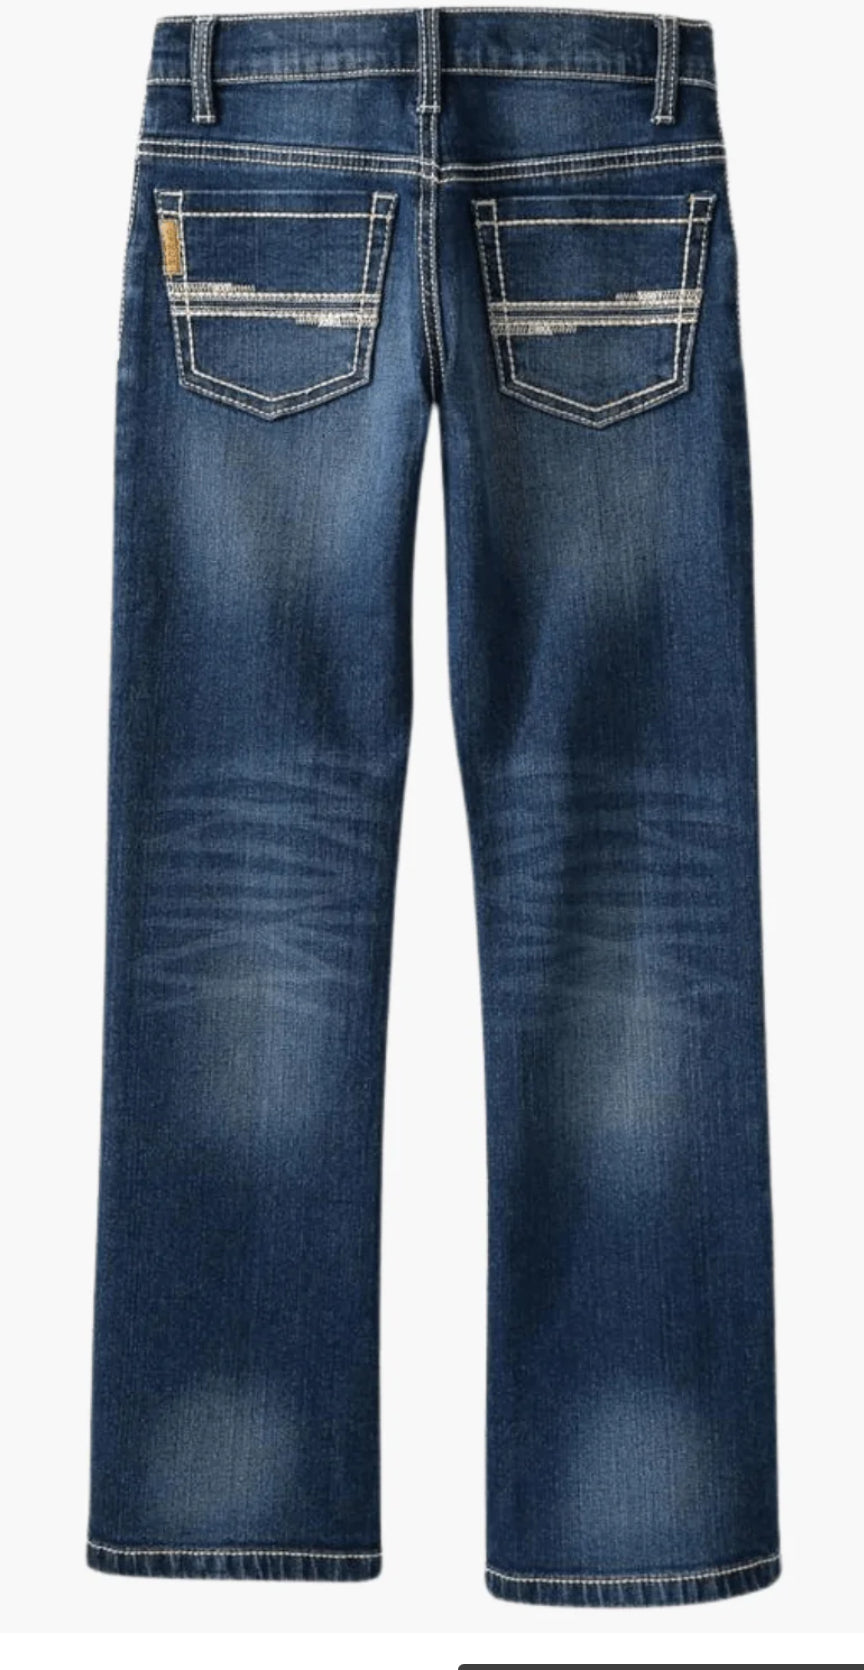 Cinch Boys Slim Fit Jeans MB16781005